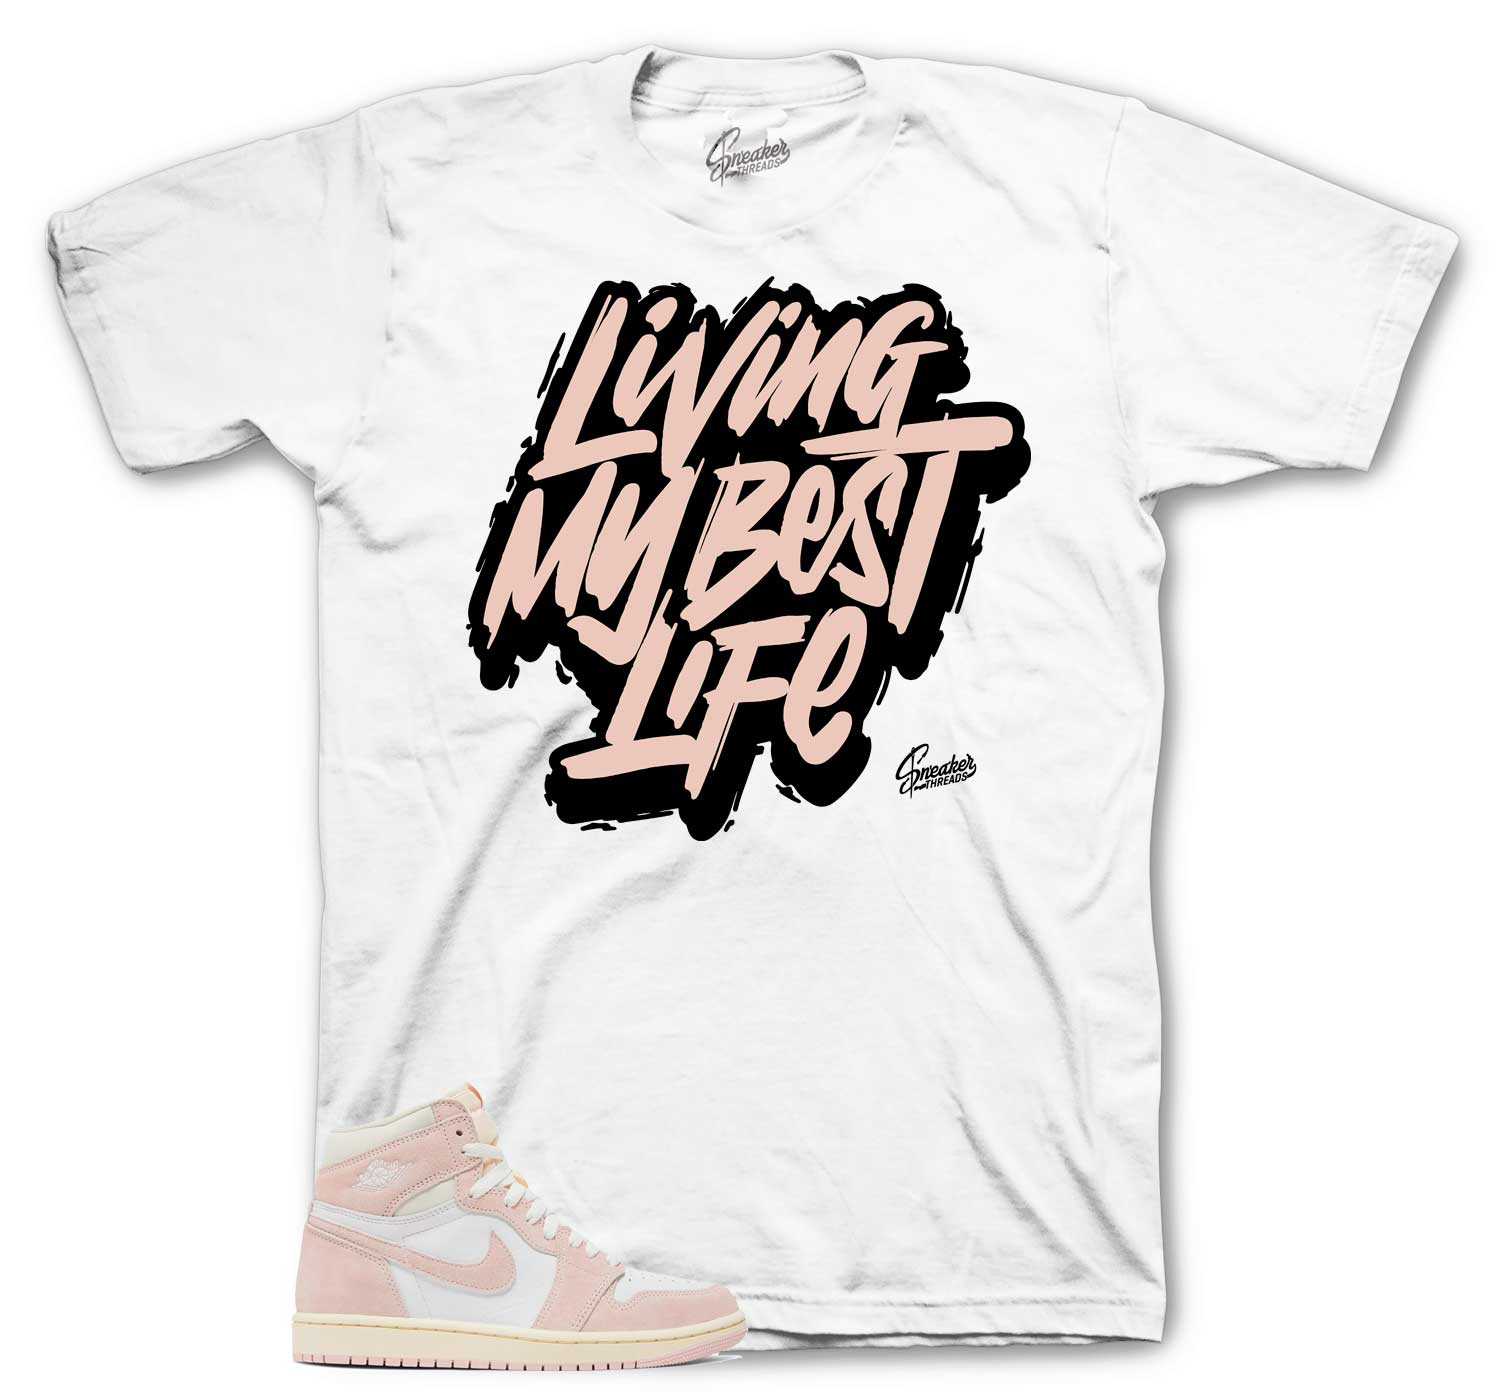 Retro 1 Washed Pink Shirt - Living Life - White